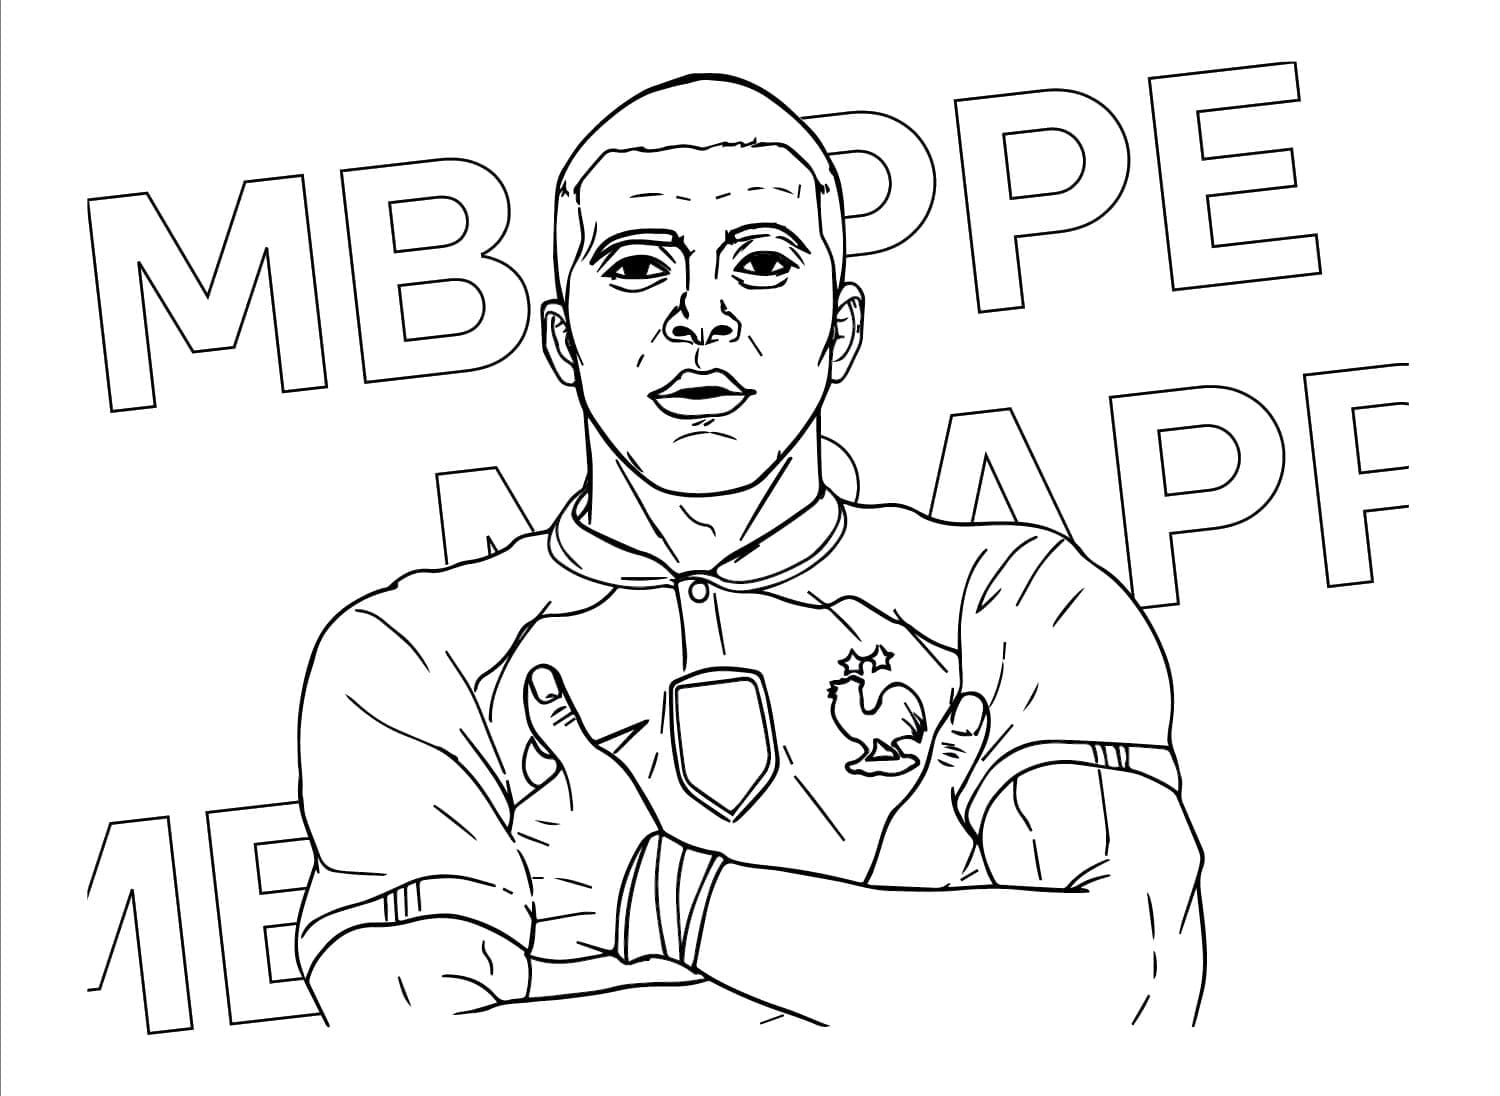 Der berühmte Fußballspieler Kylian Mbappé